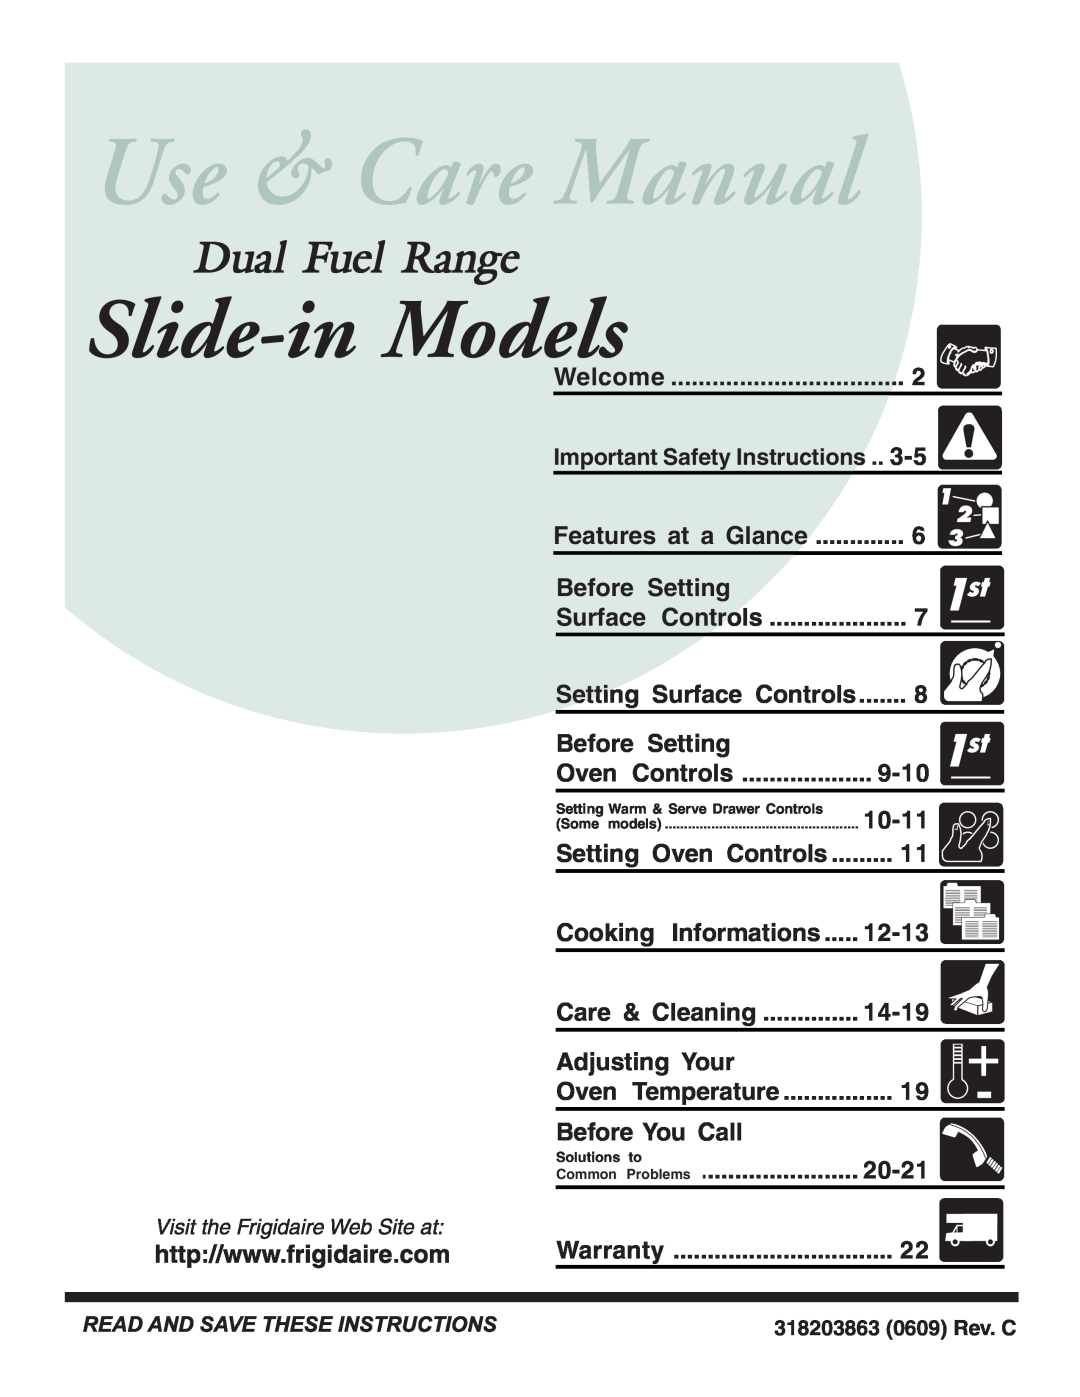 Frigidaire 318203863 warranty Slide-inModels, Dual Fuel Range 